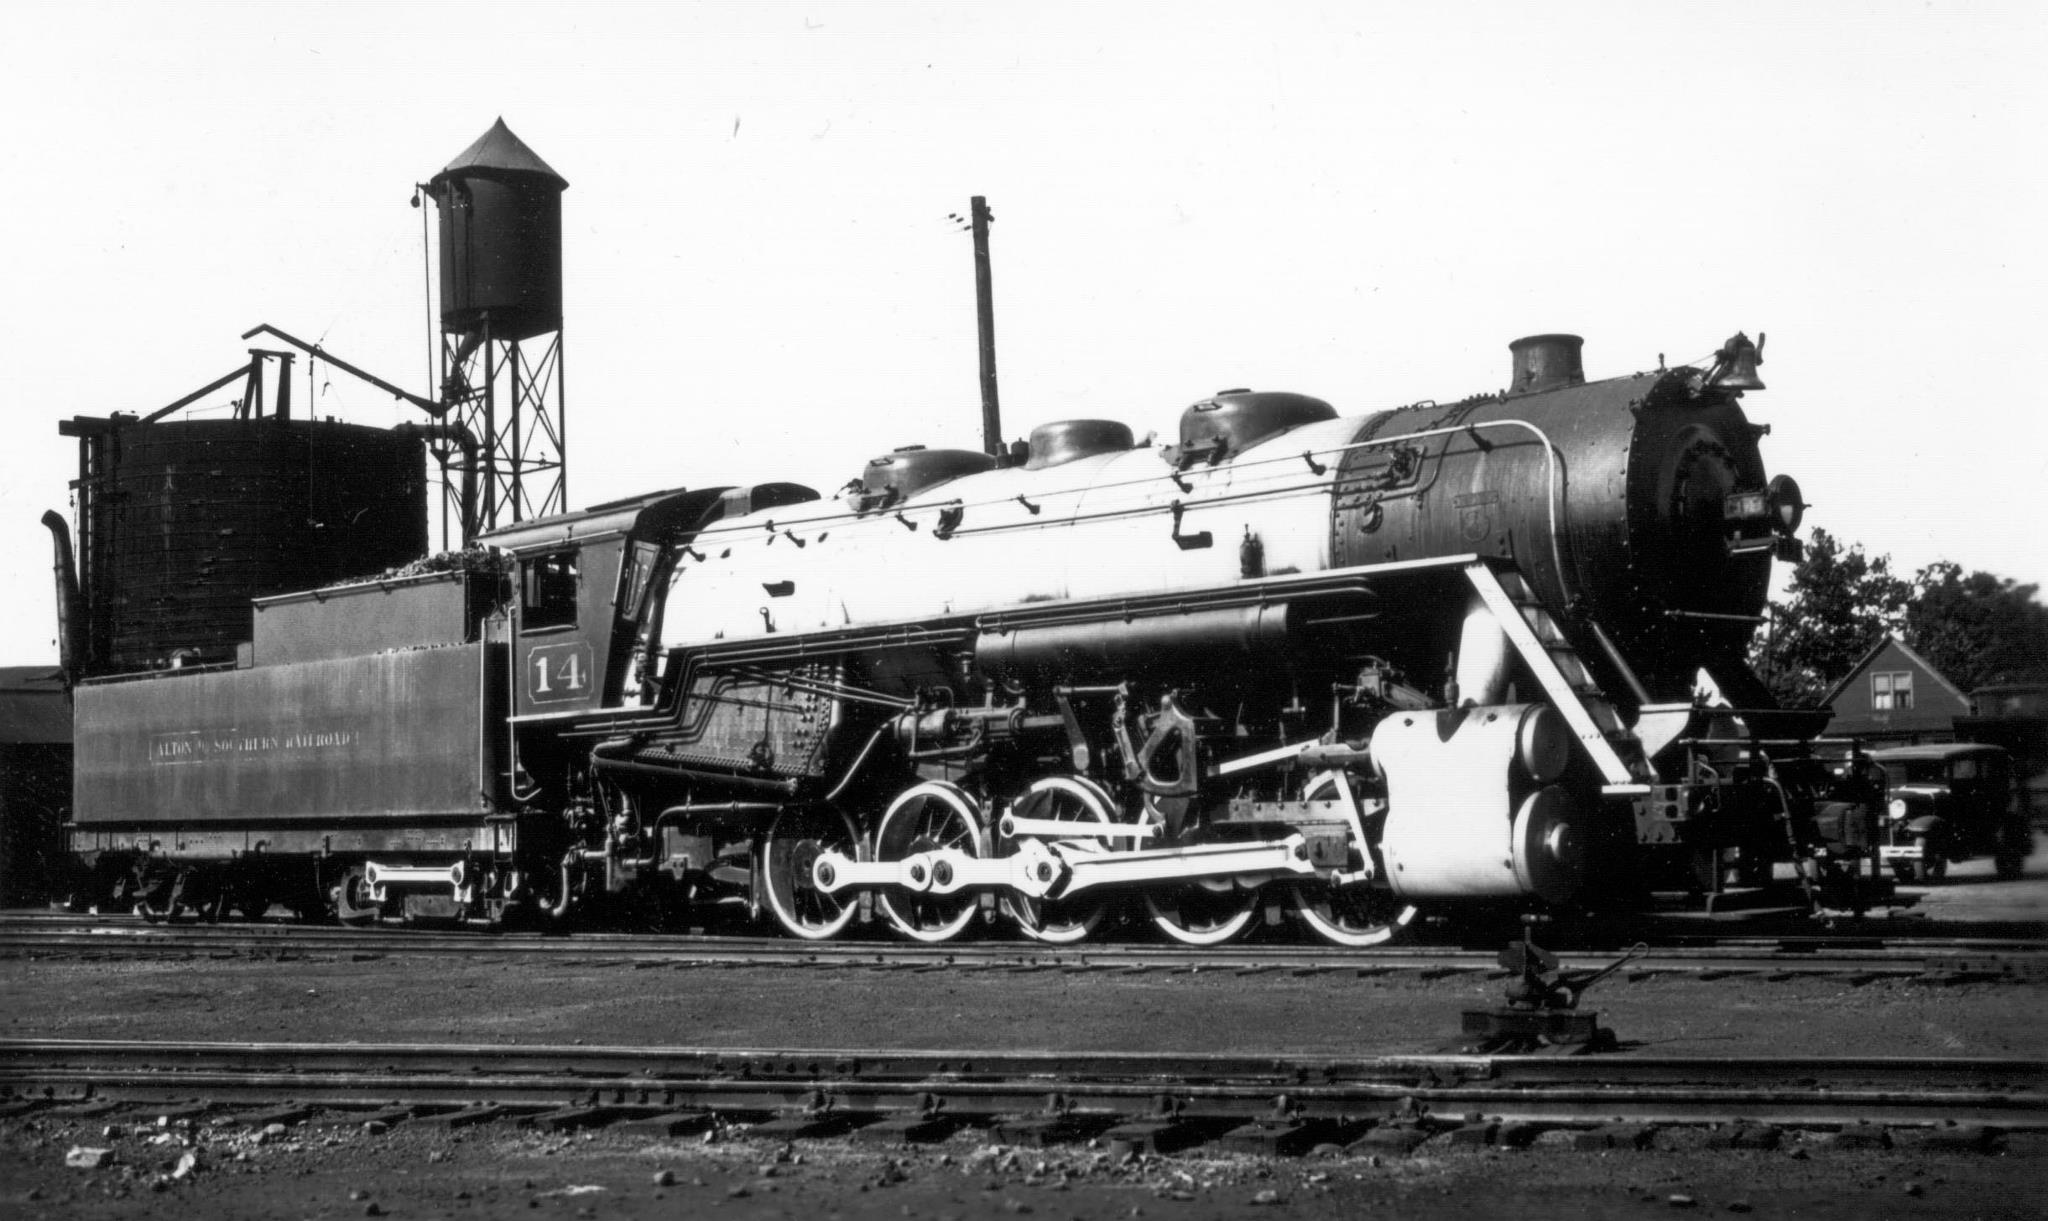 Transportation Company - Alton & Southern - Railroad